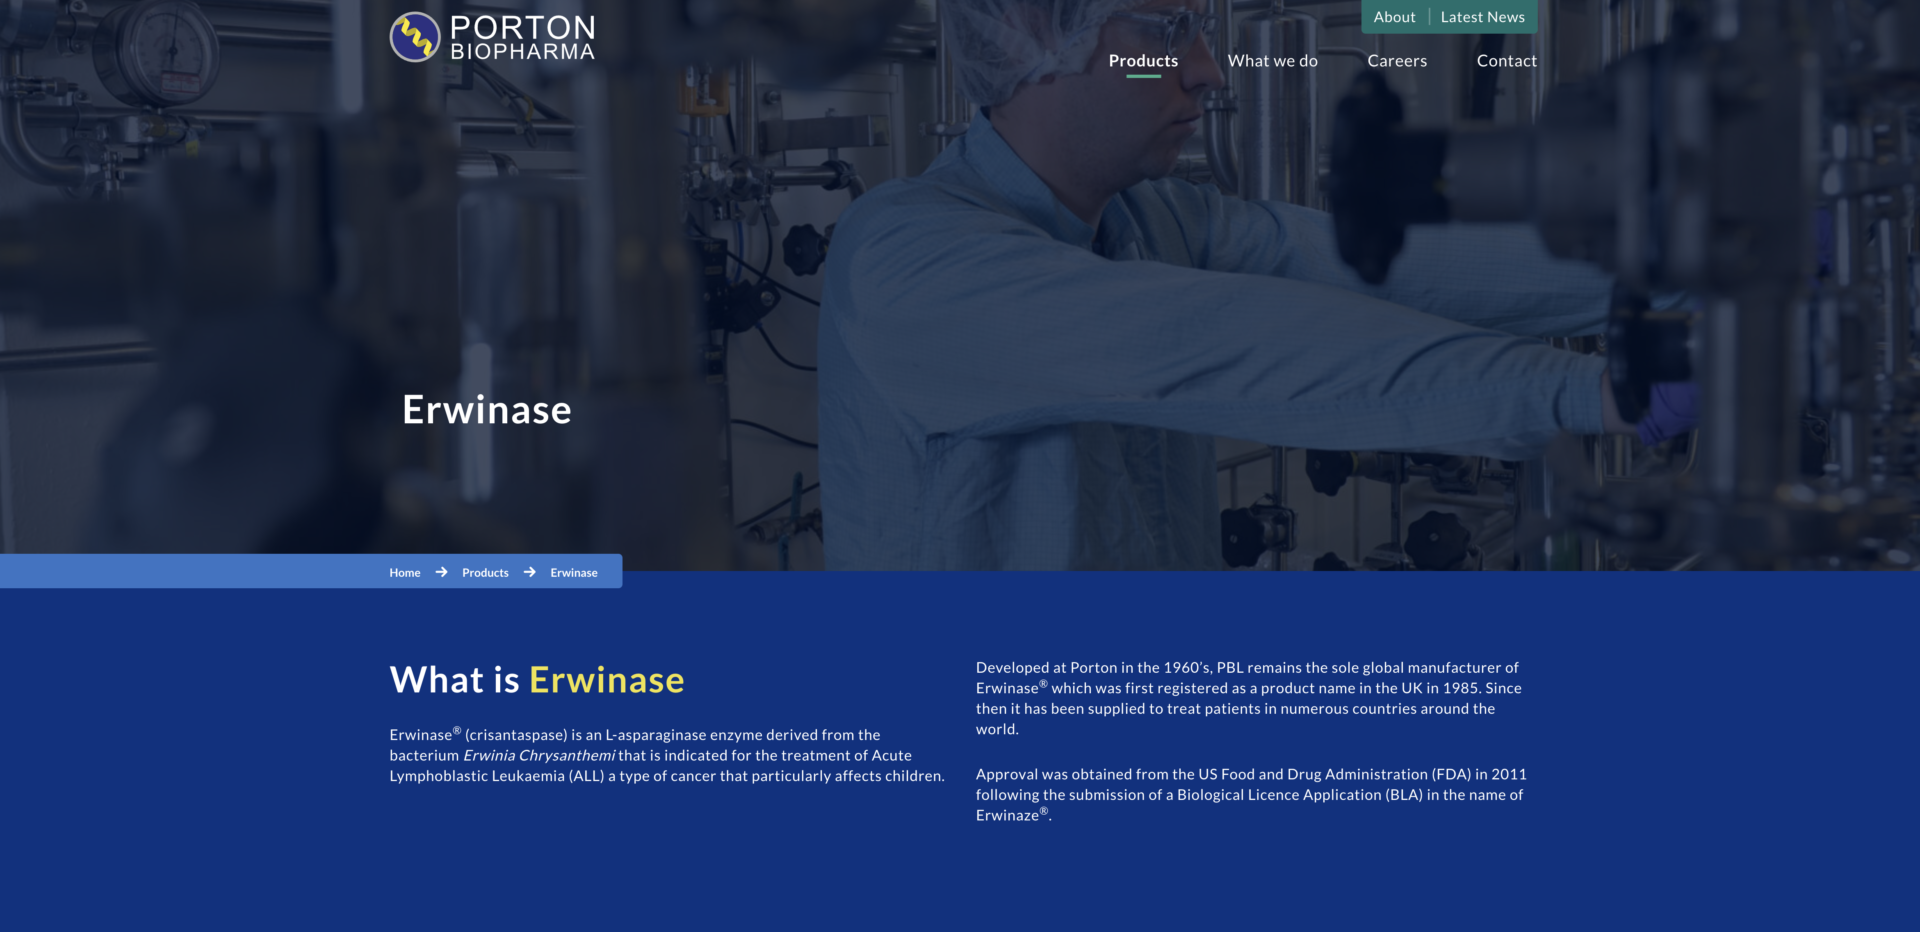 Porton Biopharma website case study